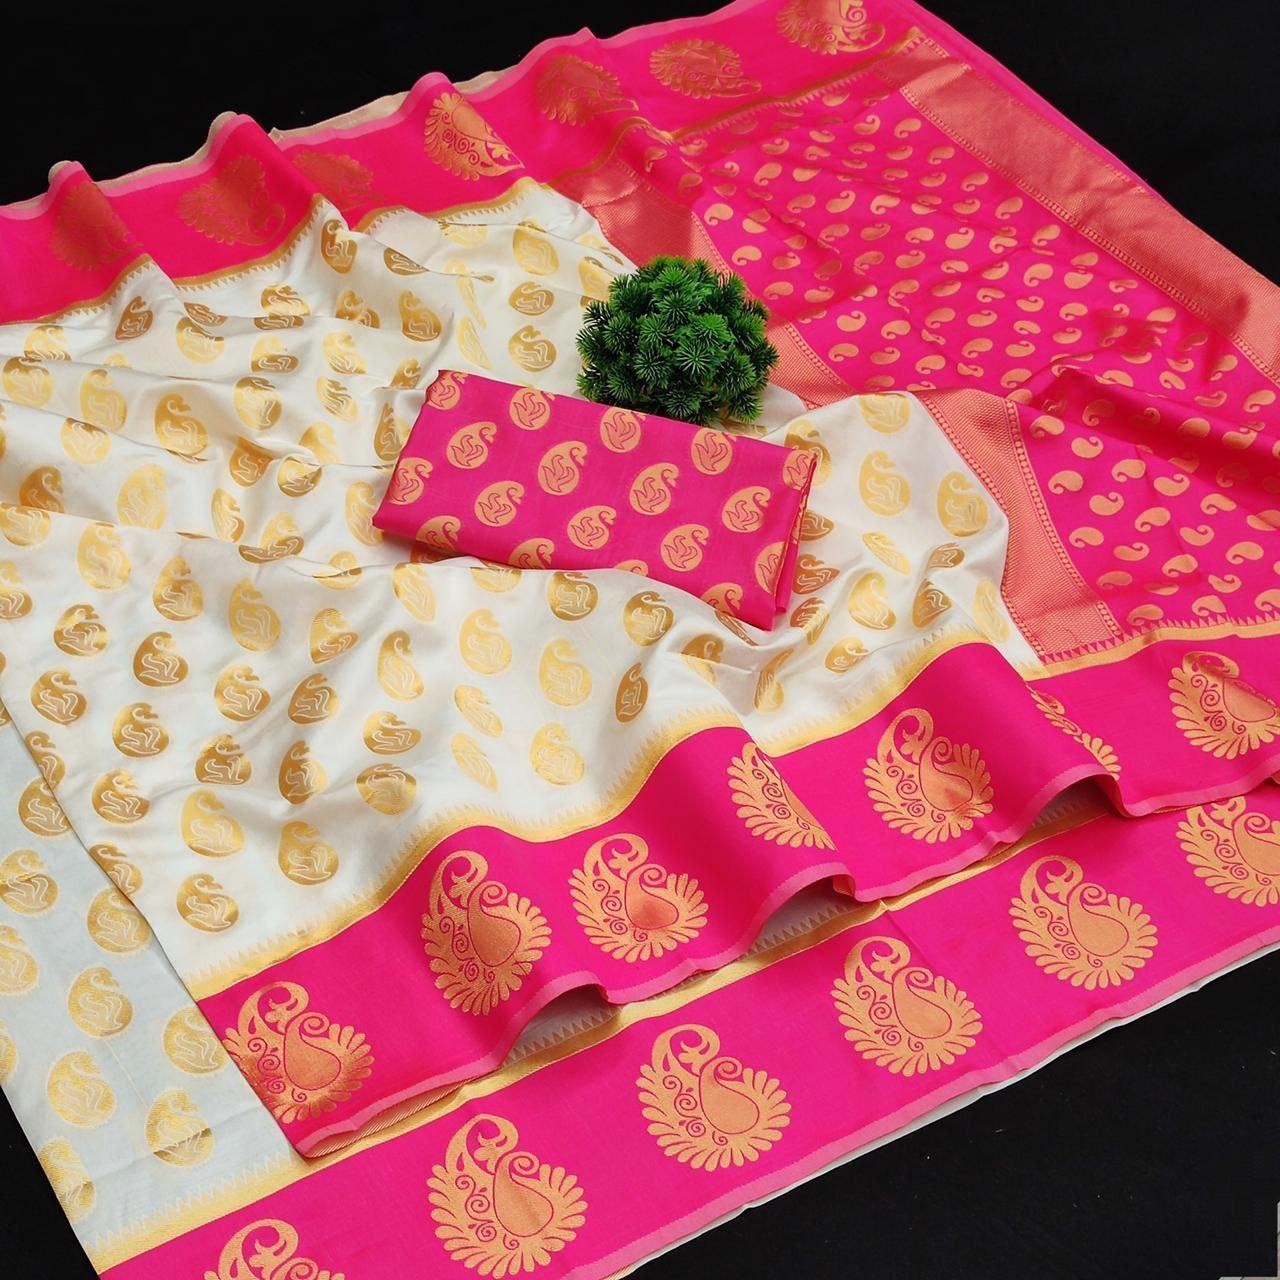 Hot Pink and White Soft Kanchipuram Silk Saree Shopindiapparels.com 